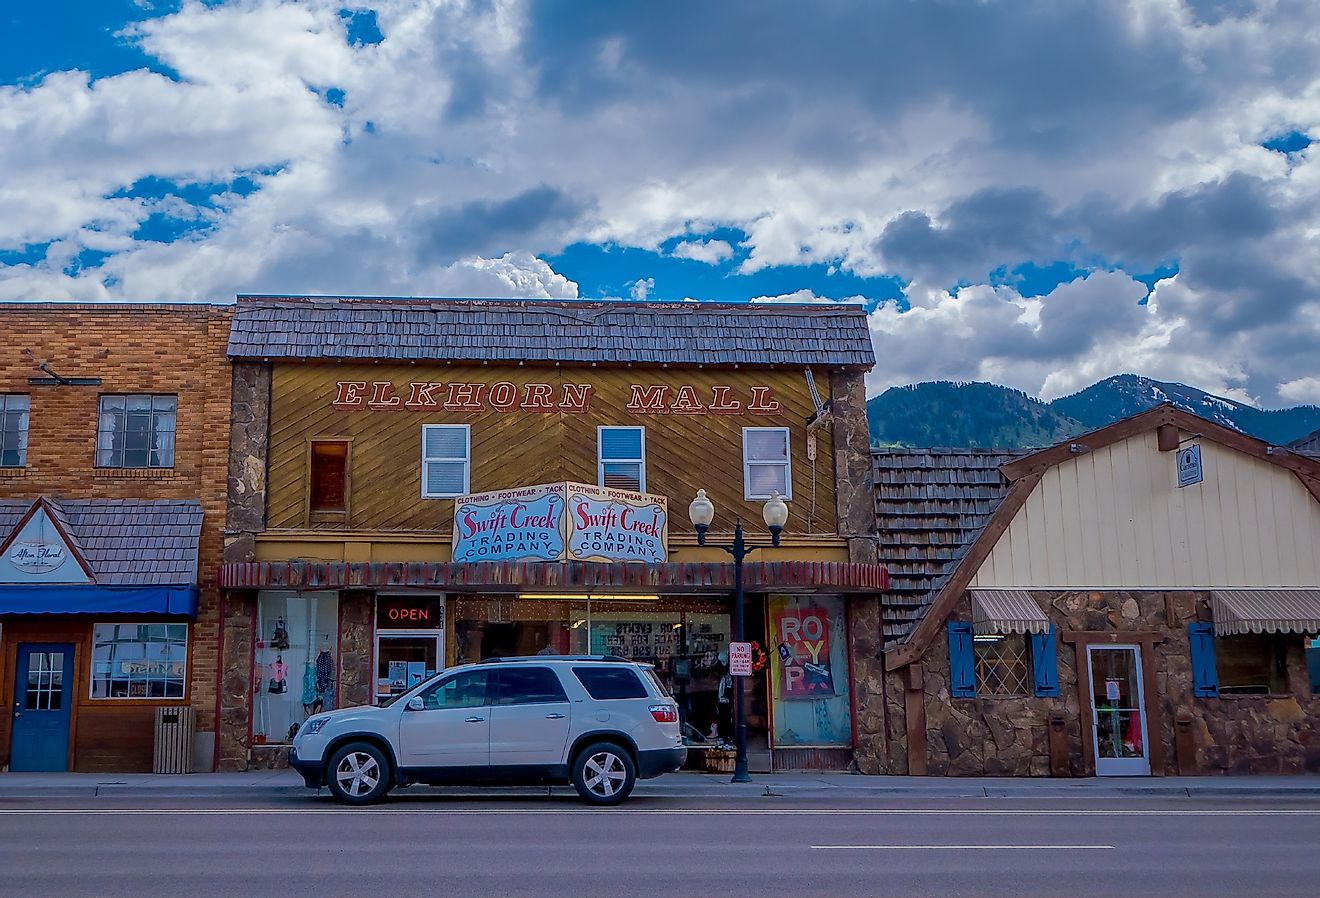 Downtown Afton, Wyoming. Image credit Fotos593 via Shutterstock